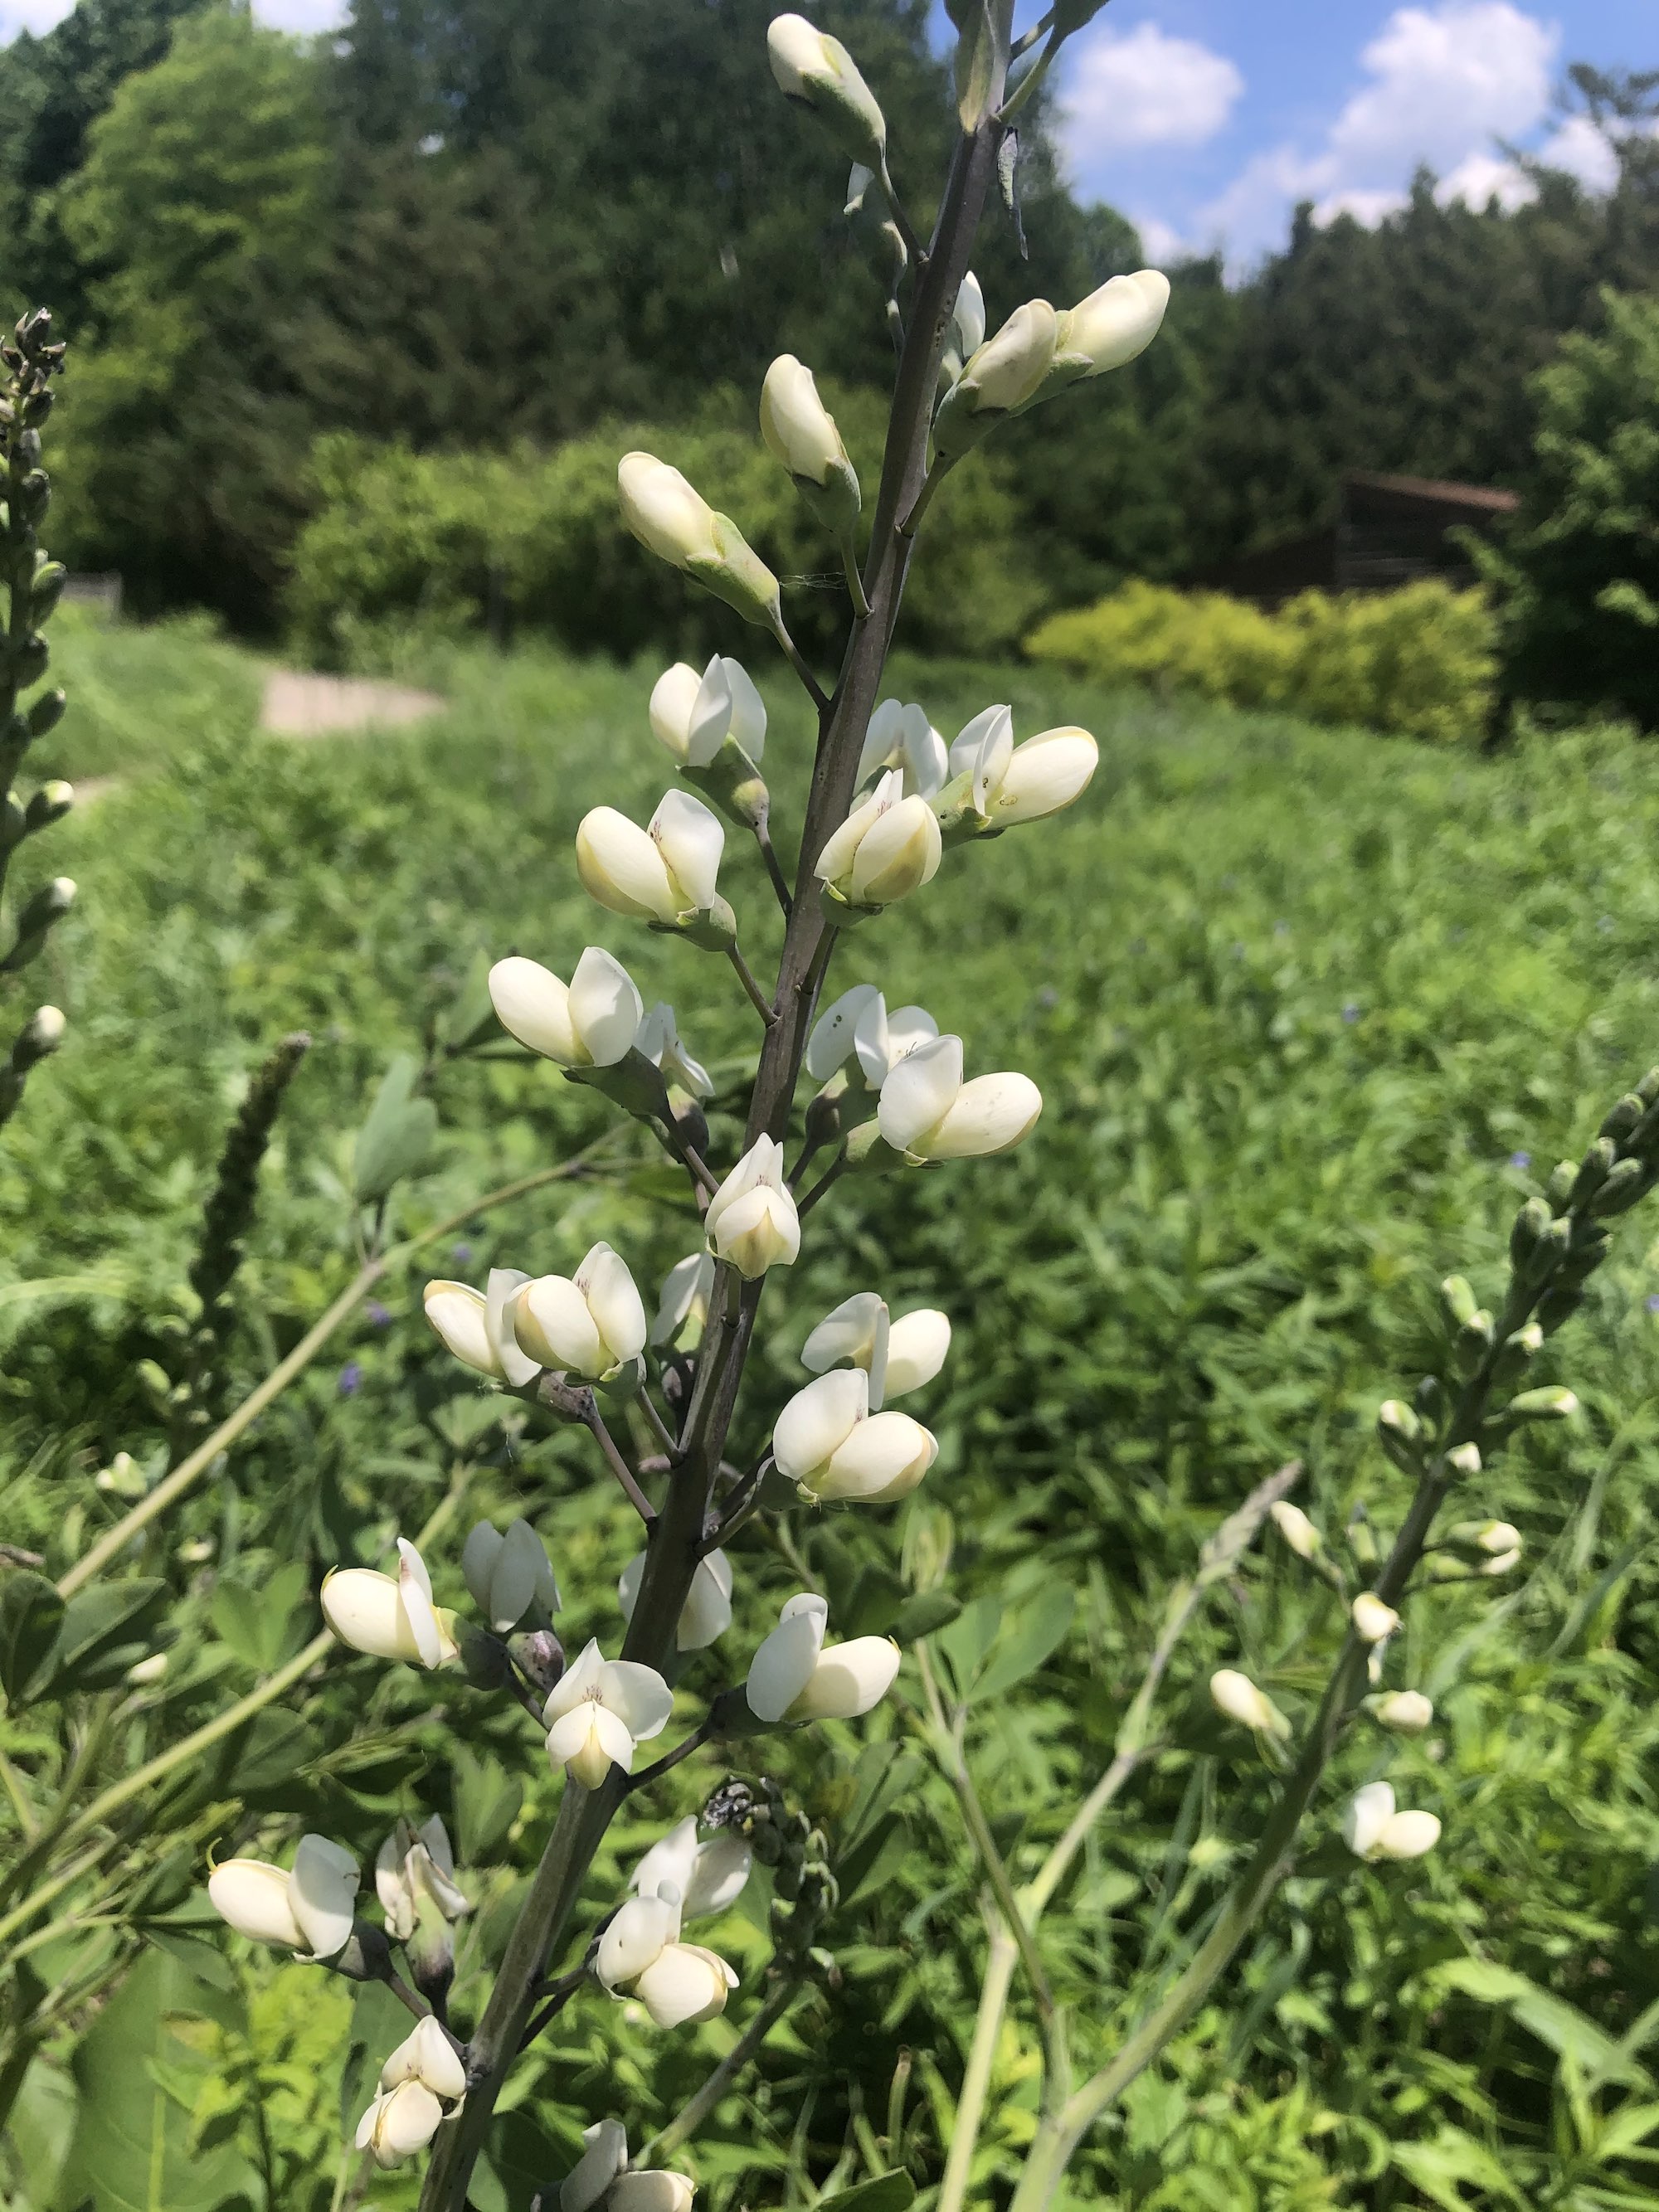 White Wild Indigo in the UW Arboretum Nature Garden in Madison, Wisconsin on June 2, 2021.